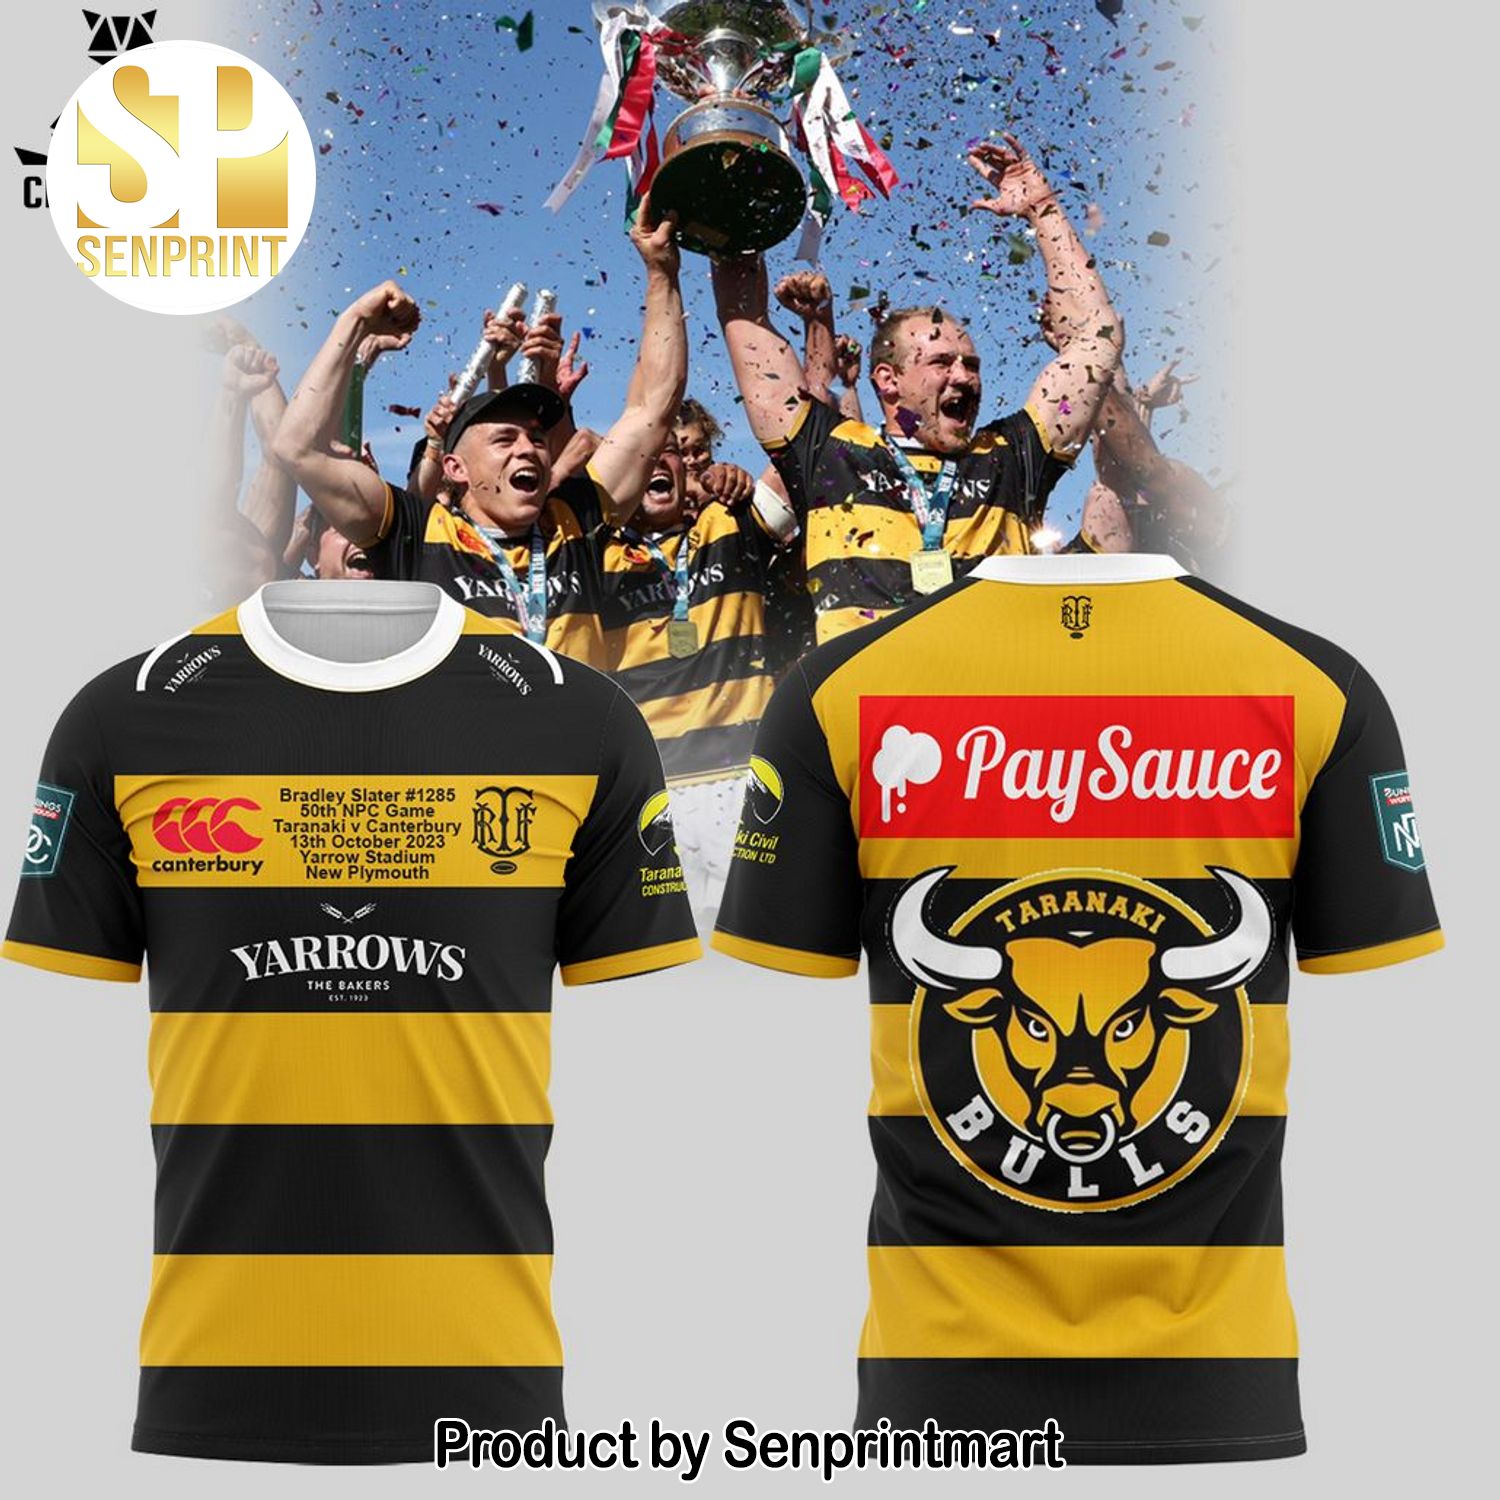 Tanaraki Bulls Rugby Champions Up The All Blacks Mascot 3D Full Printed Shirt